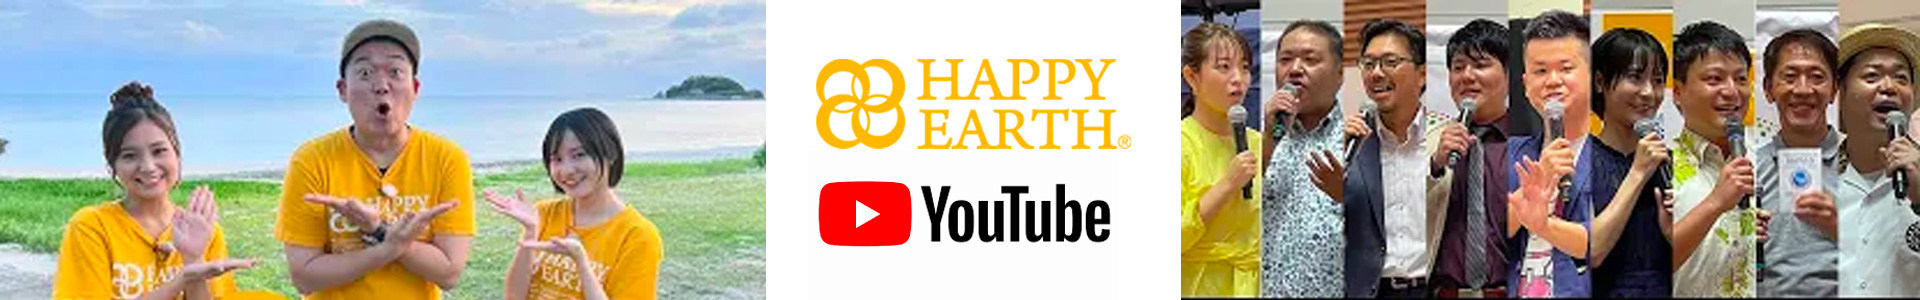 HAPPY EARTH YouTube